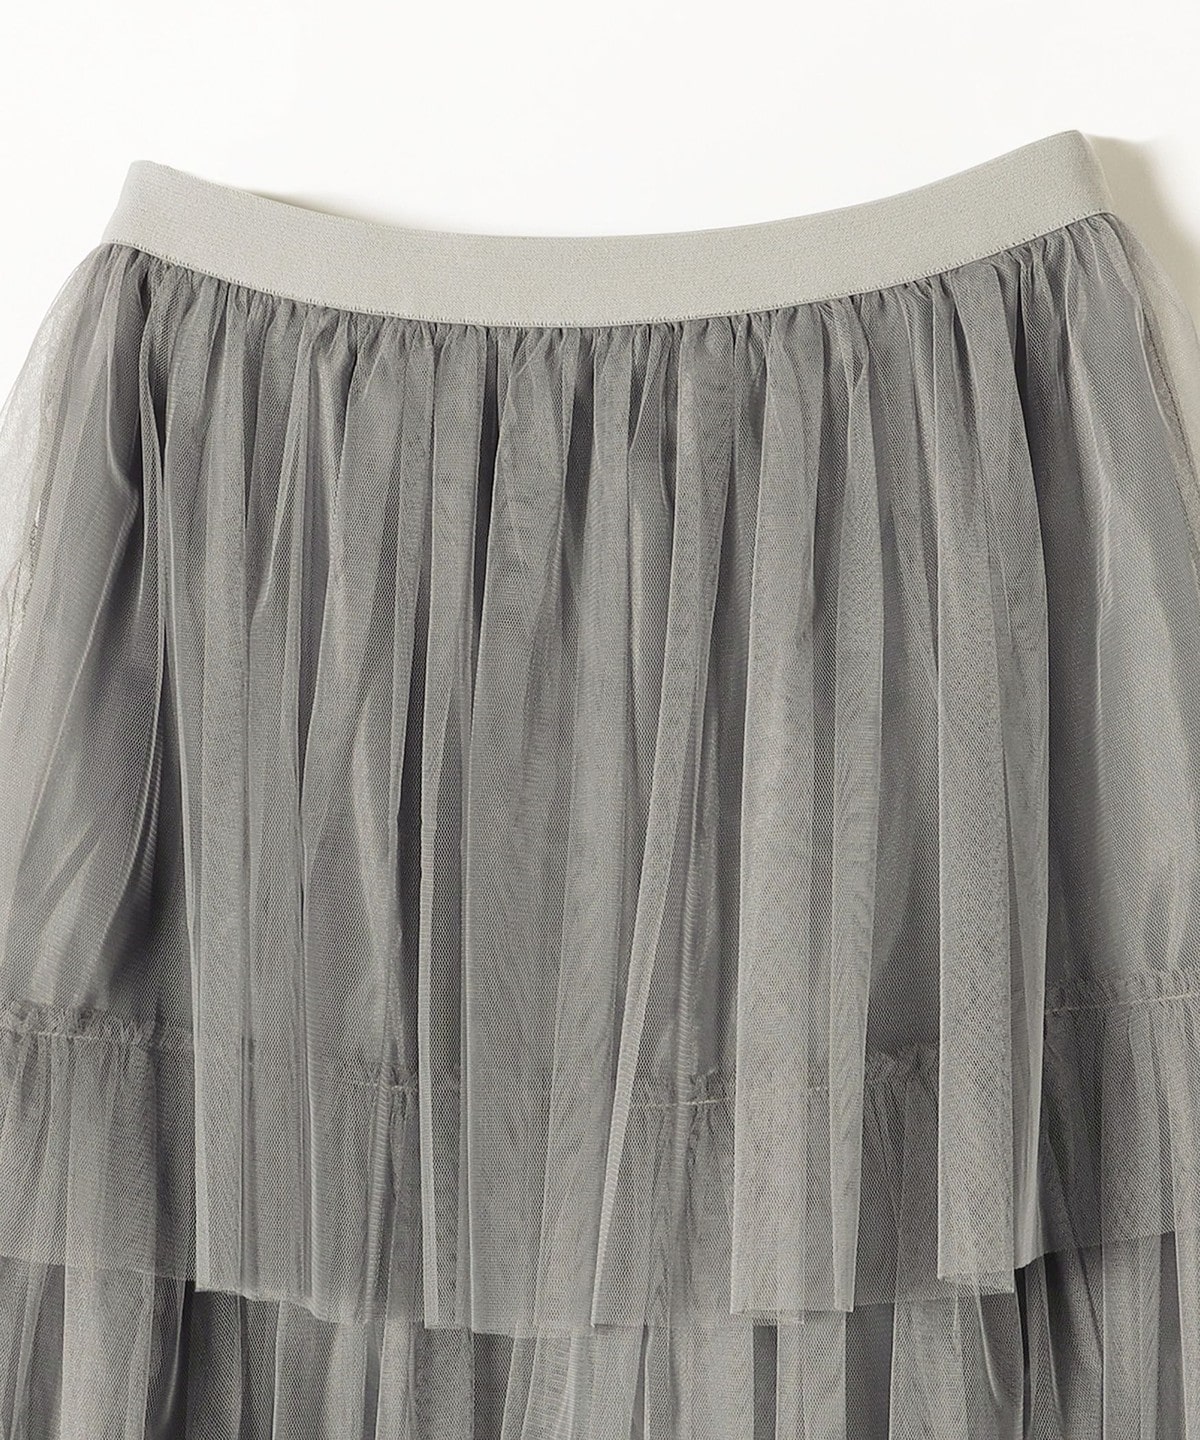 SHIPS any:〈手洗い可能〉チュール ティアード スカート: スカート